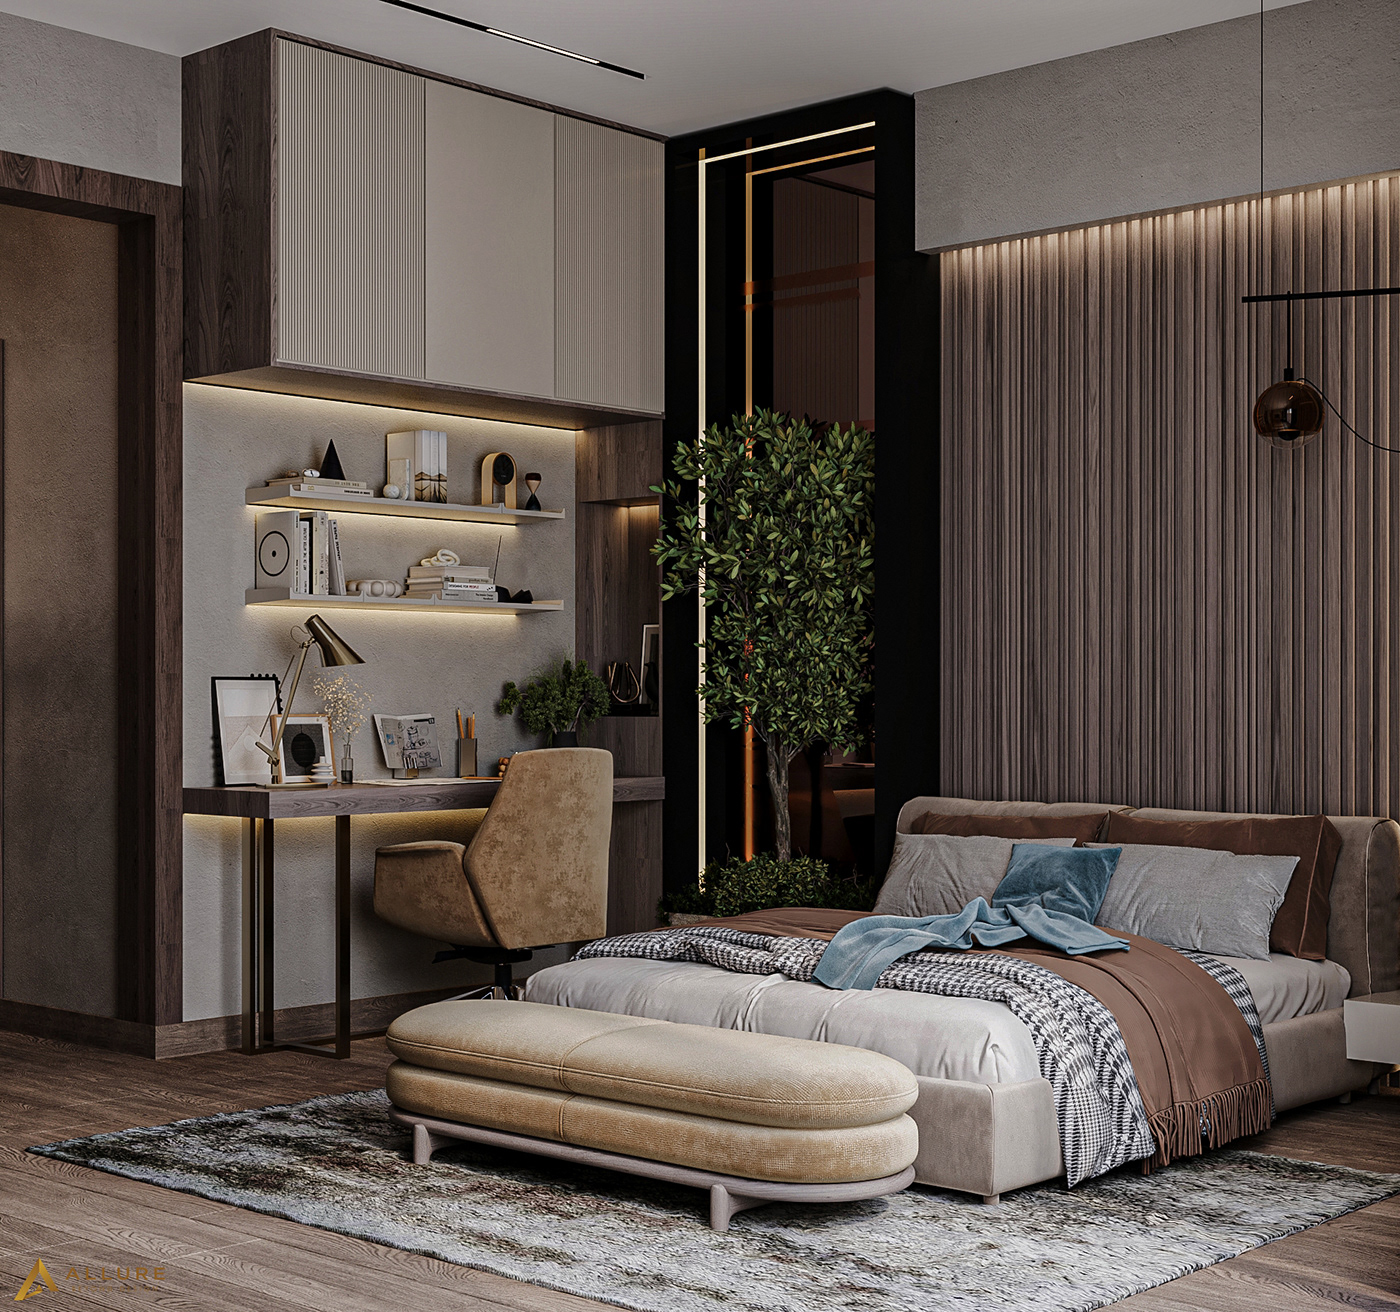 luxury bedroom bedroom design master bedroom modern Modern Design тв contemporary interior design  Interior